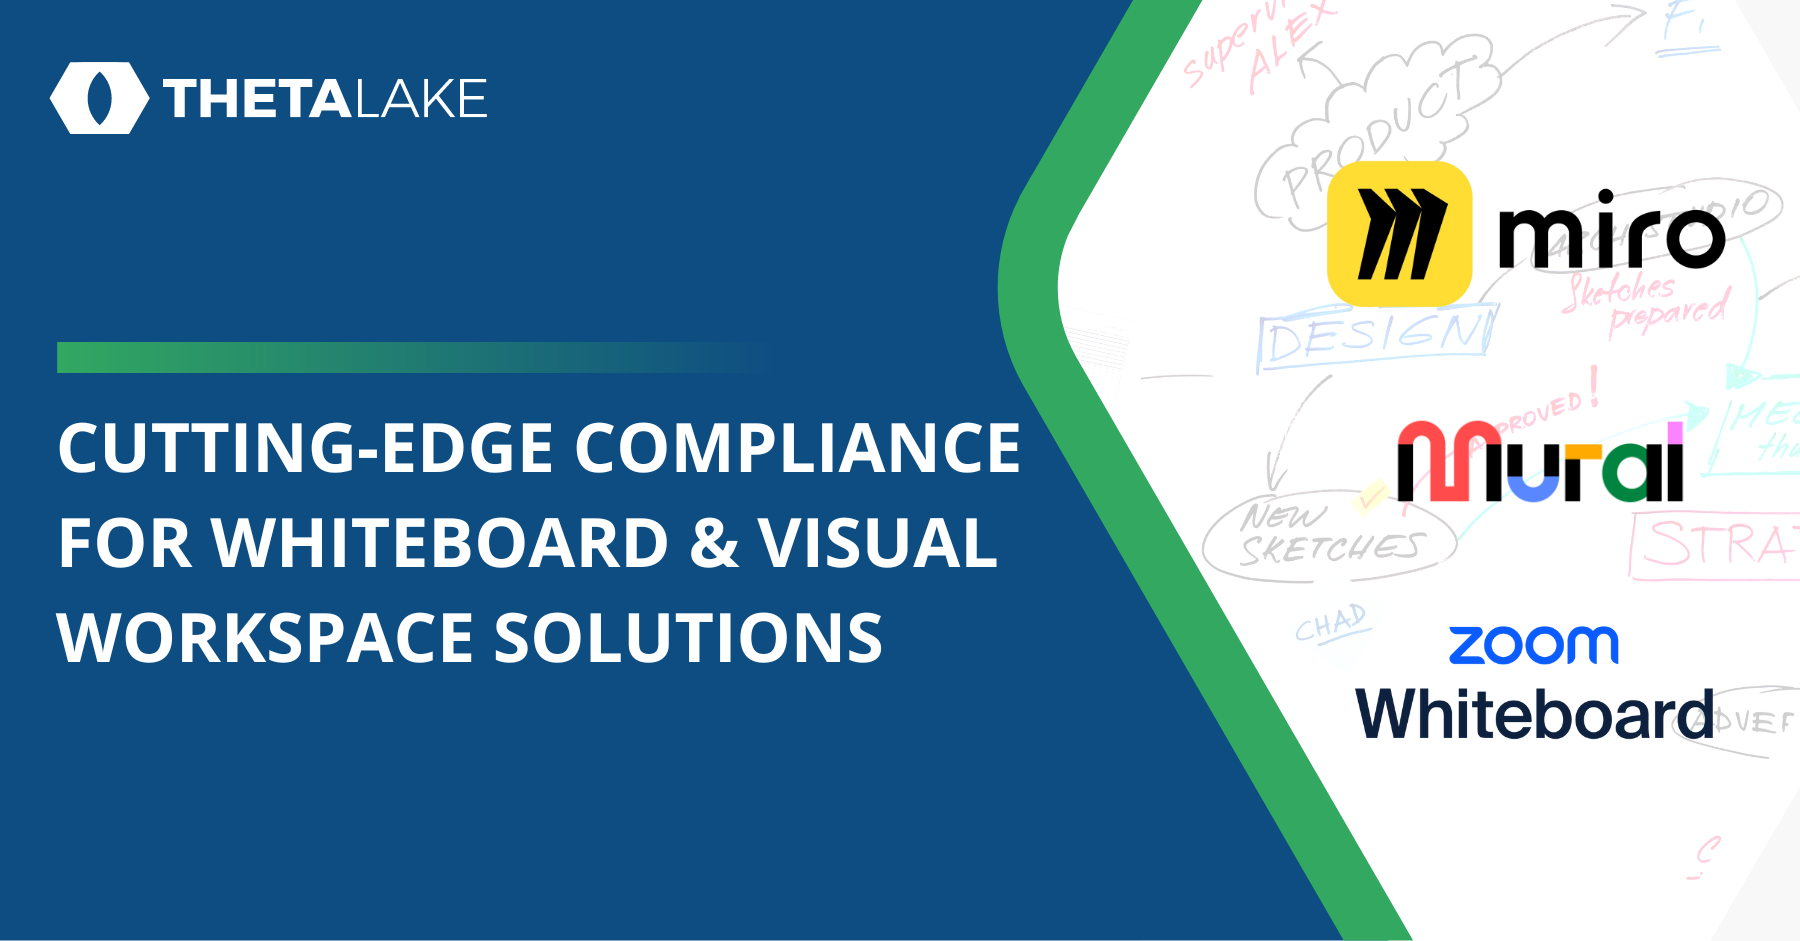 ThetaLake Whiteboard Compliance Solution